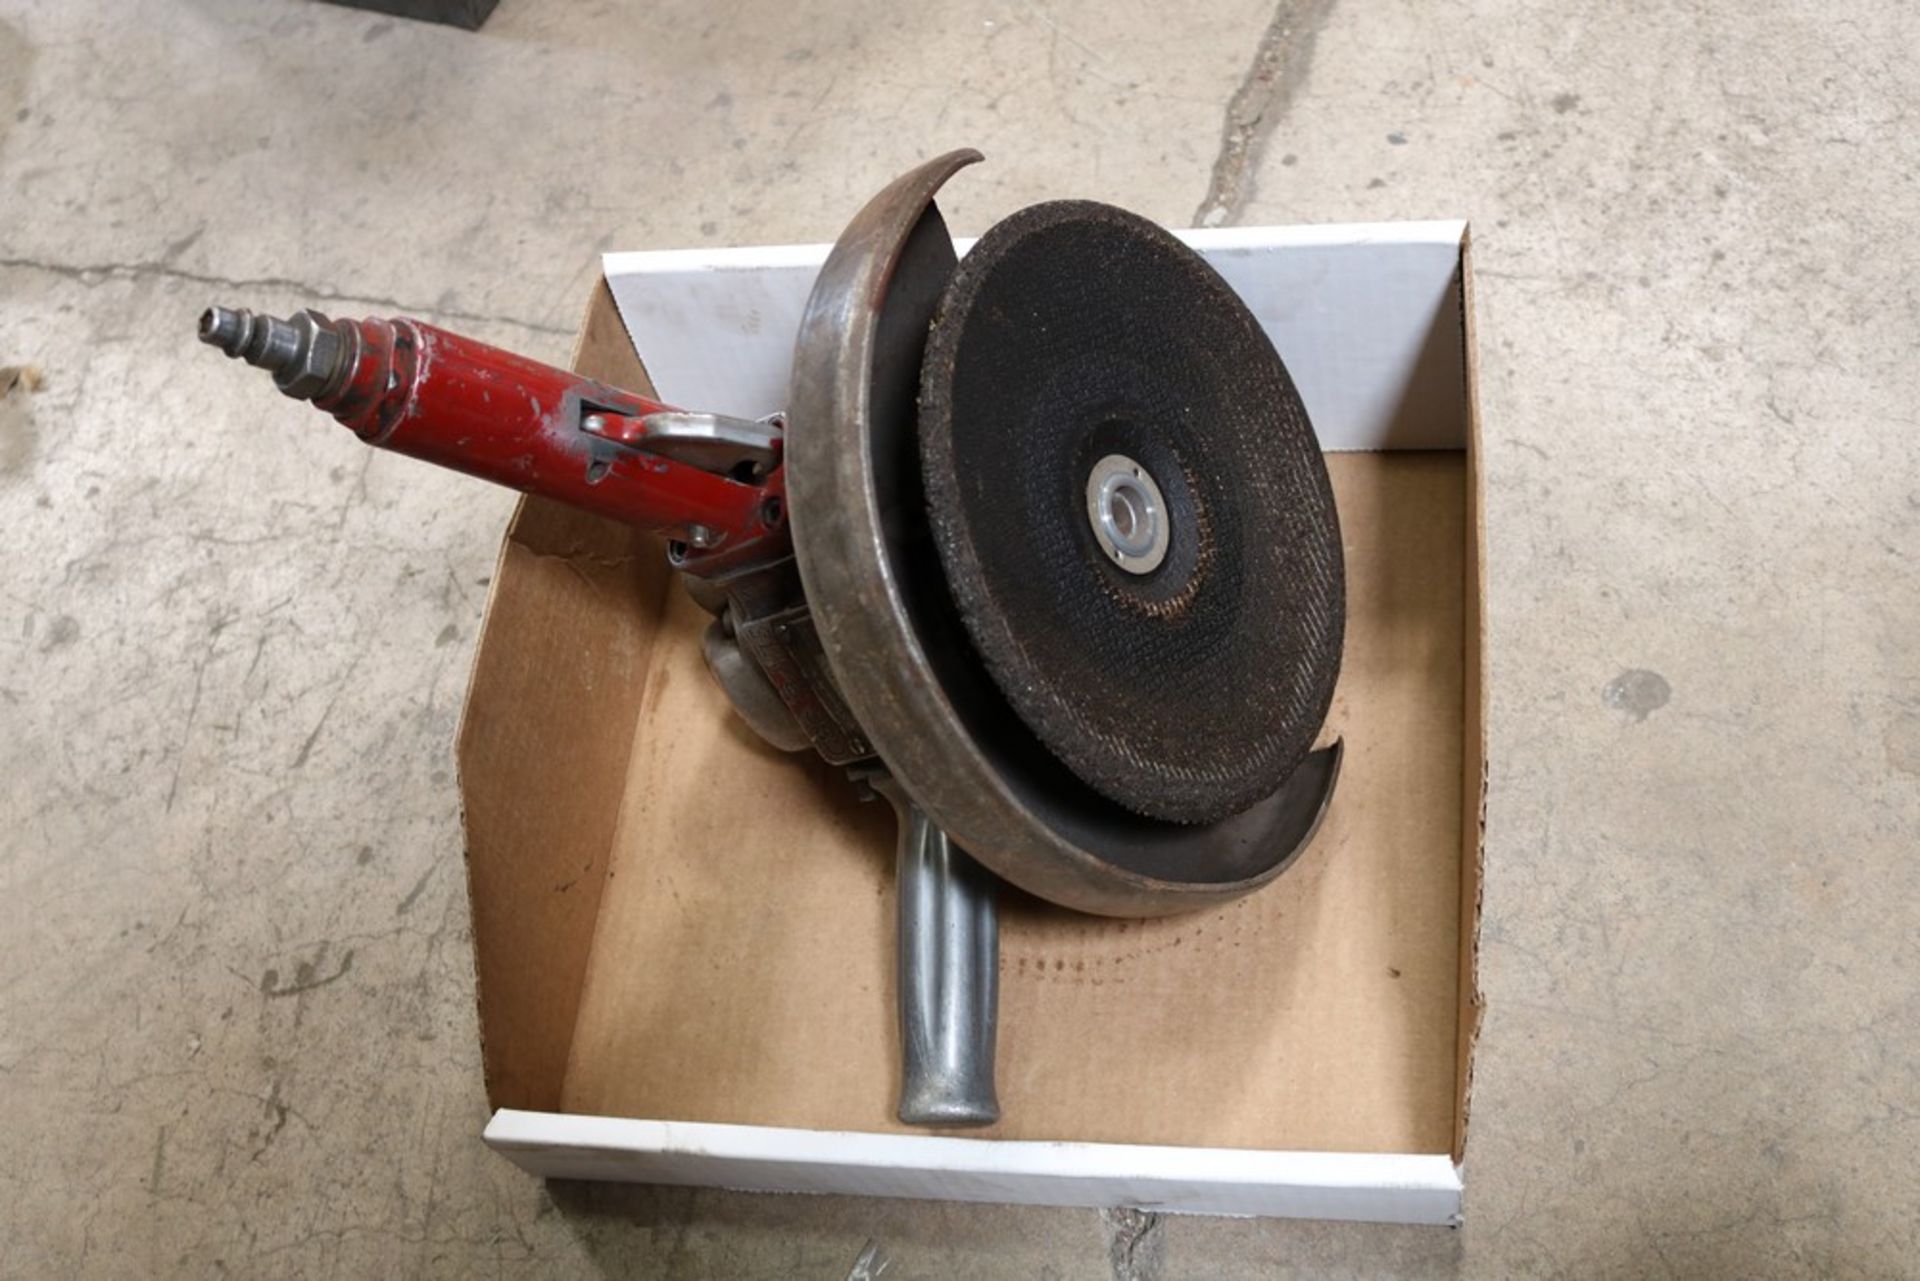 chicago pneumatic grinder/sander w/ 9'' x 1/4'' x 5/8'' ginder wheel - Image 2 of 2